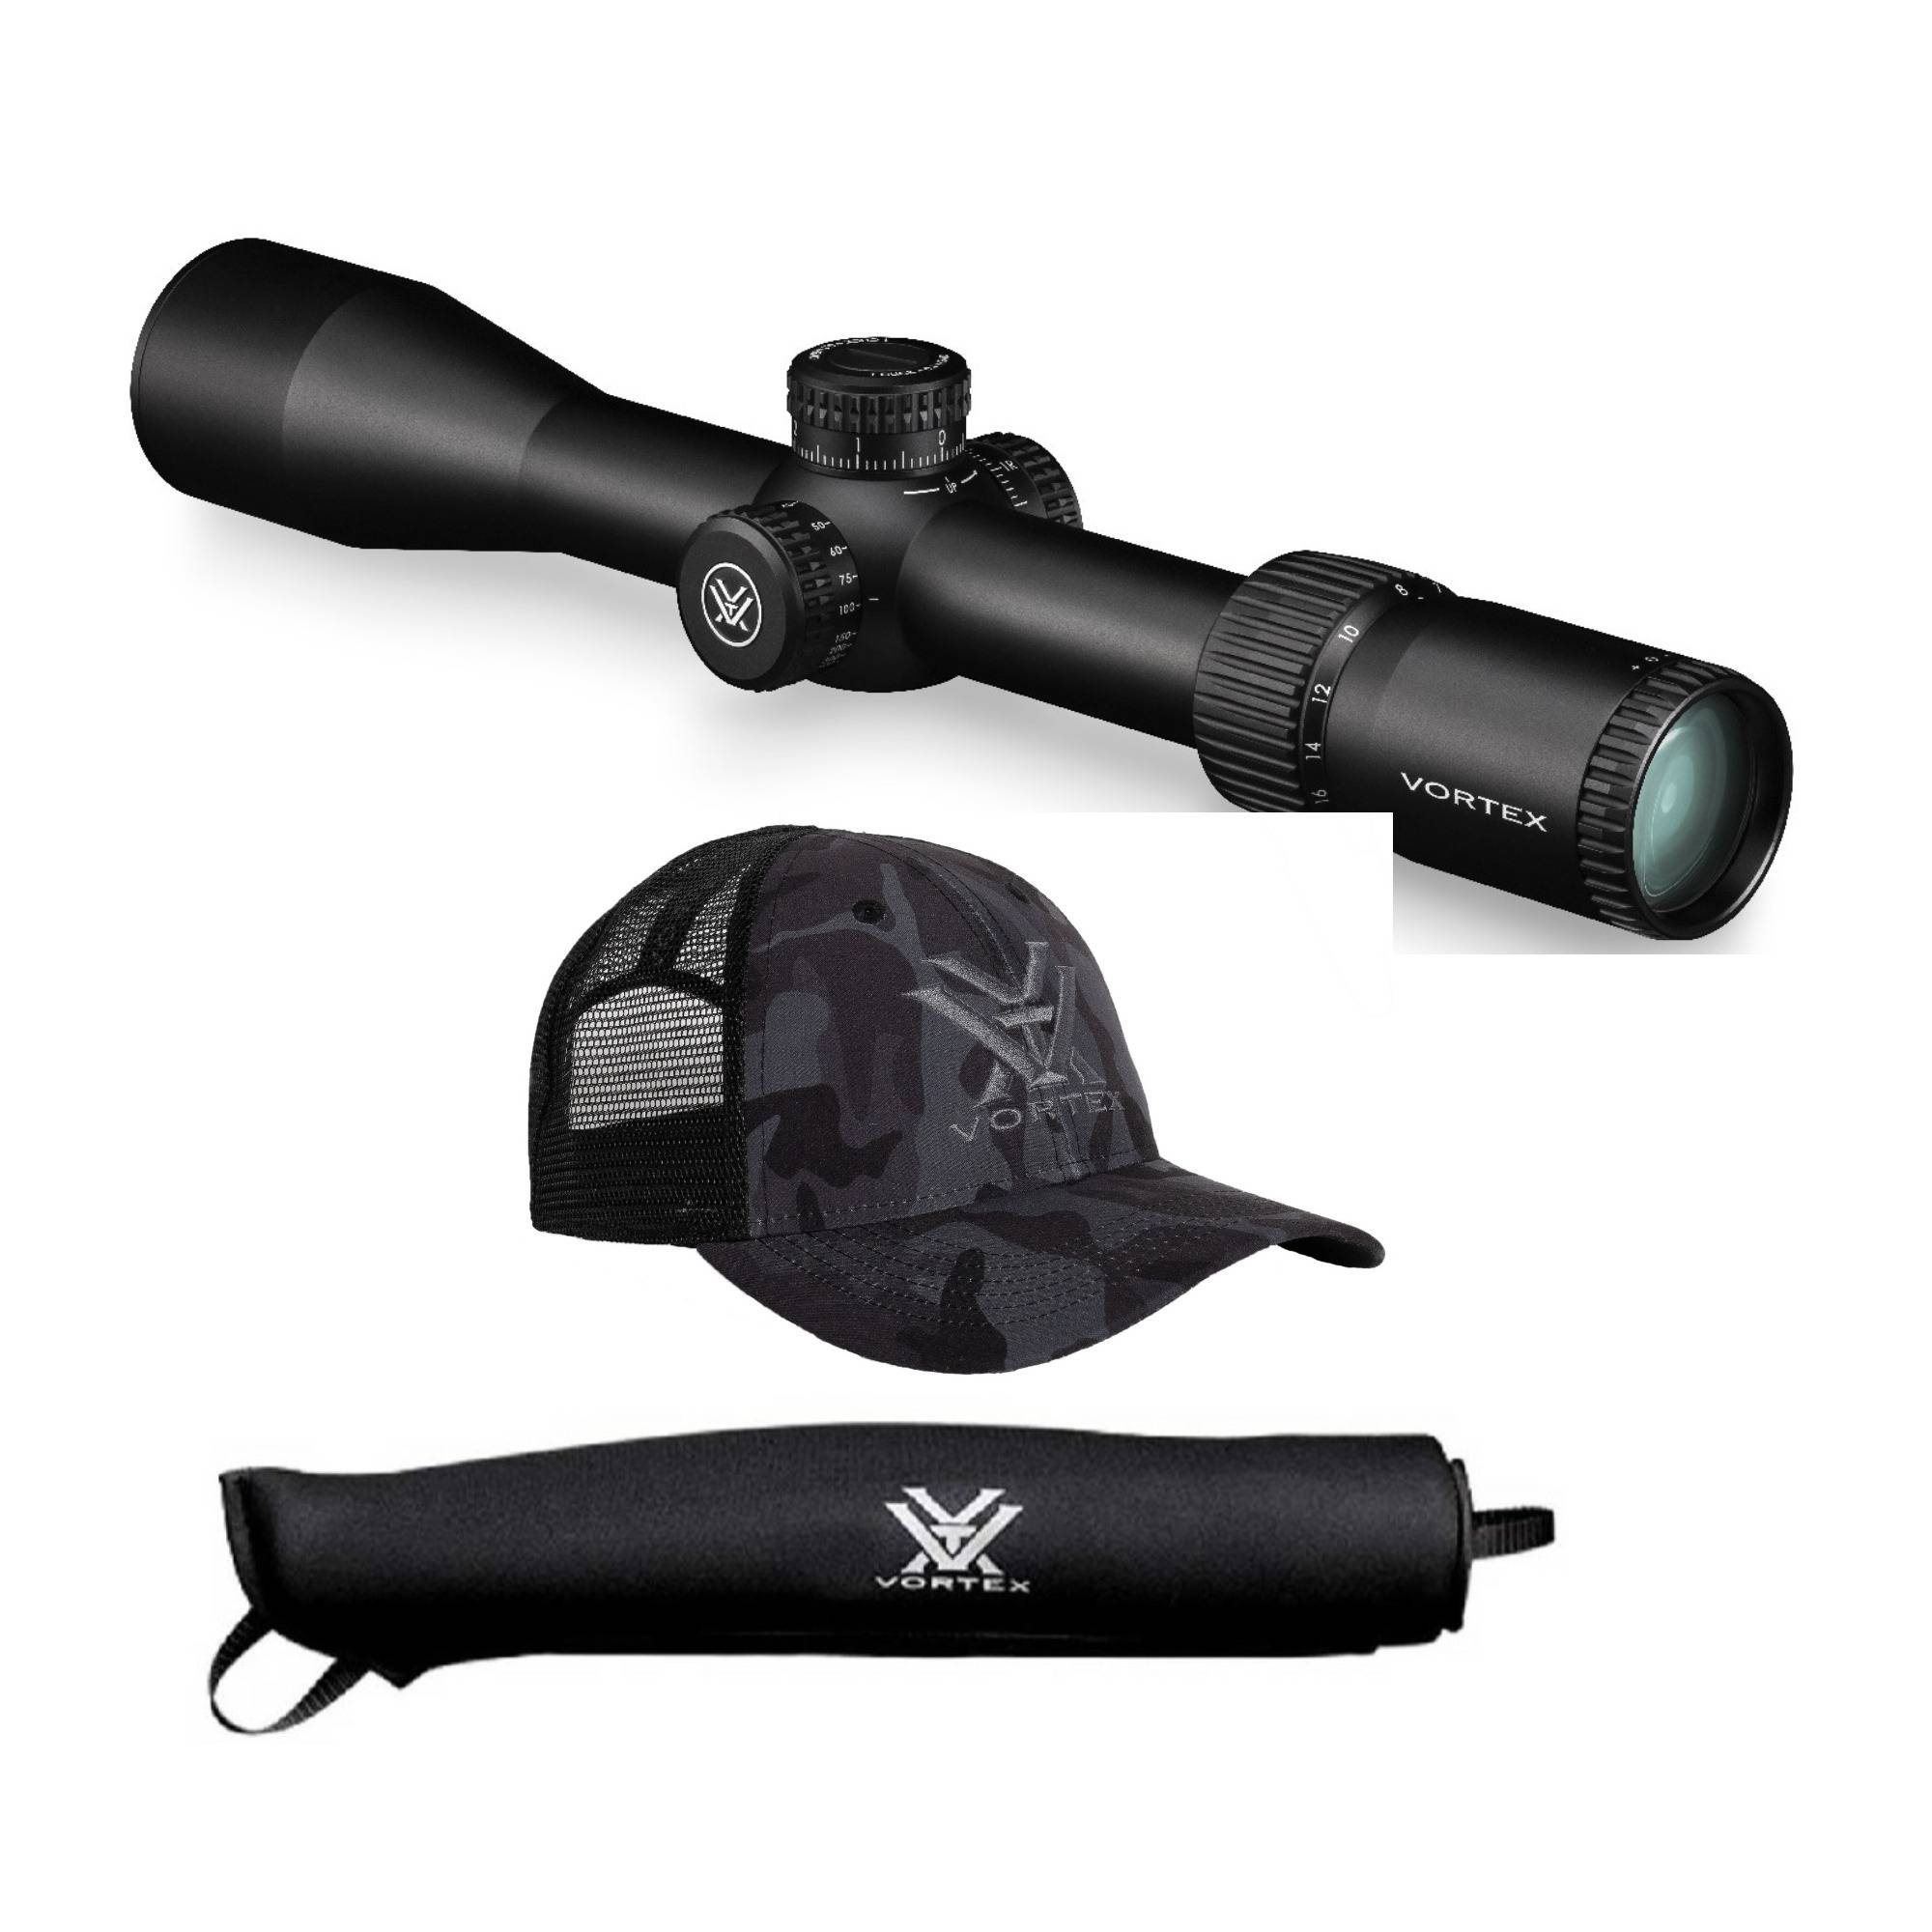 Vortex Diamondback Tactical 4-16x44 Riflescope (EBR-2C MRAD Reticle) with Cover Bundle